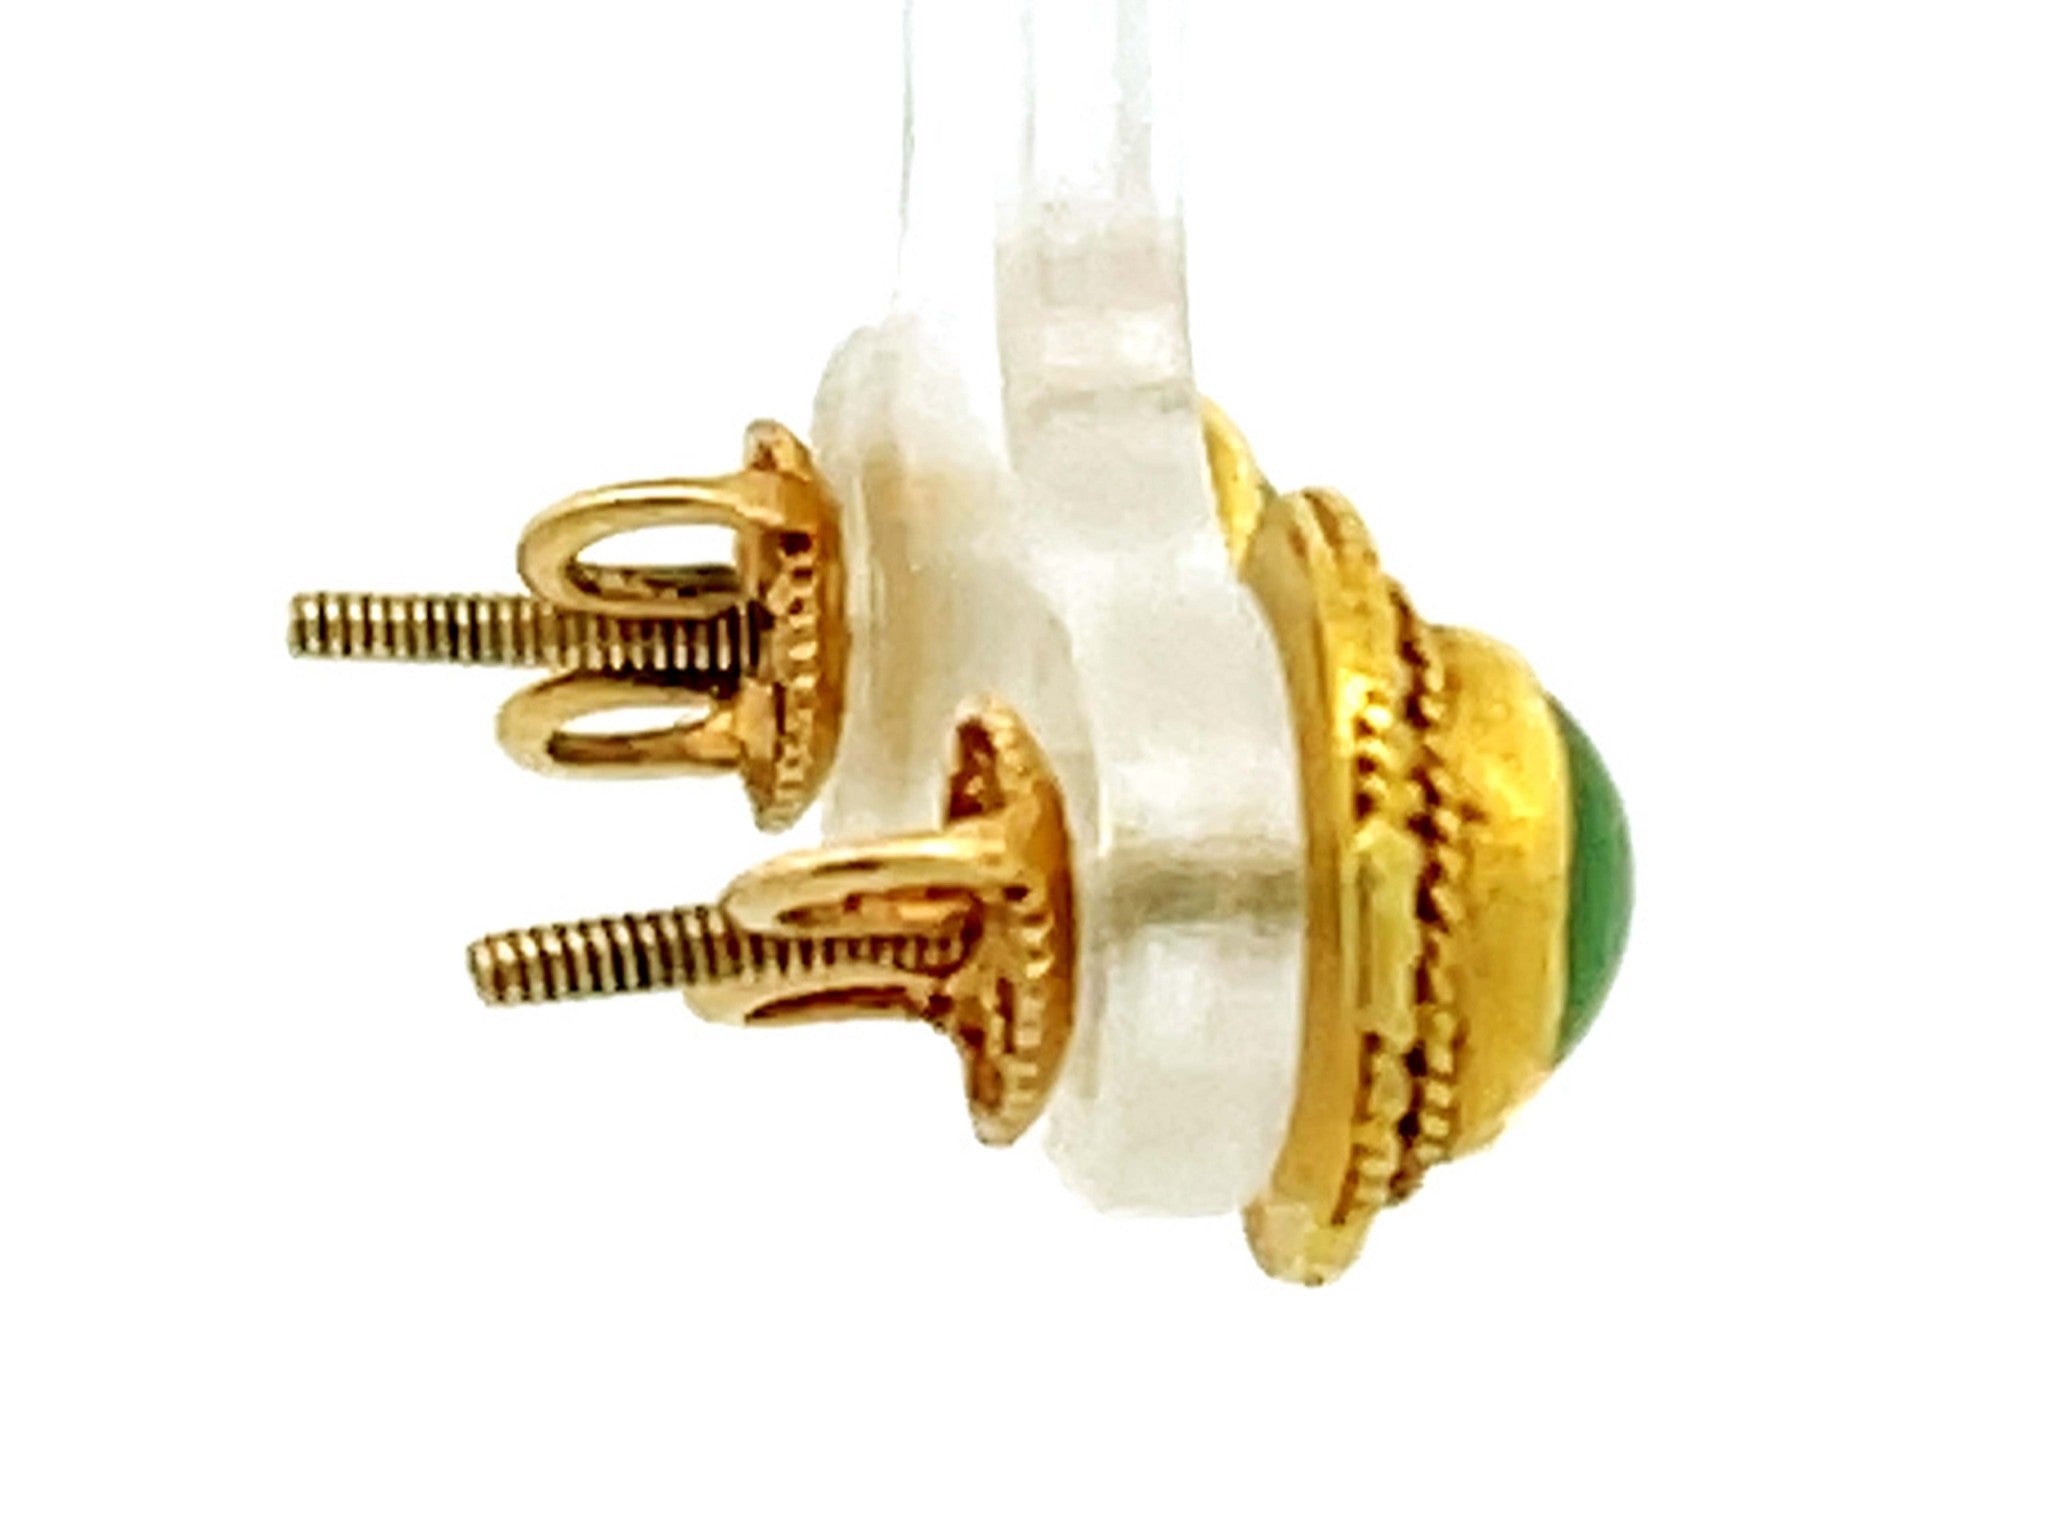 Cabochon Jade Stud Earrings 10k Yellow Gold